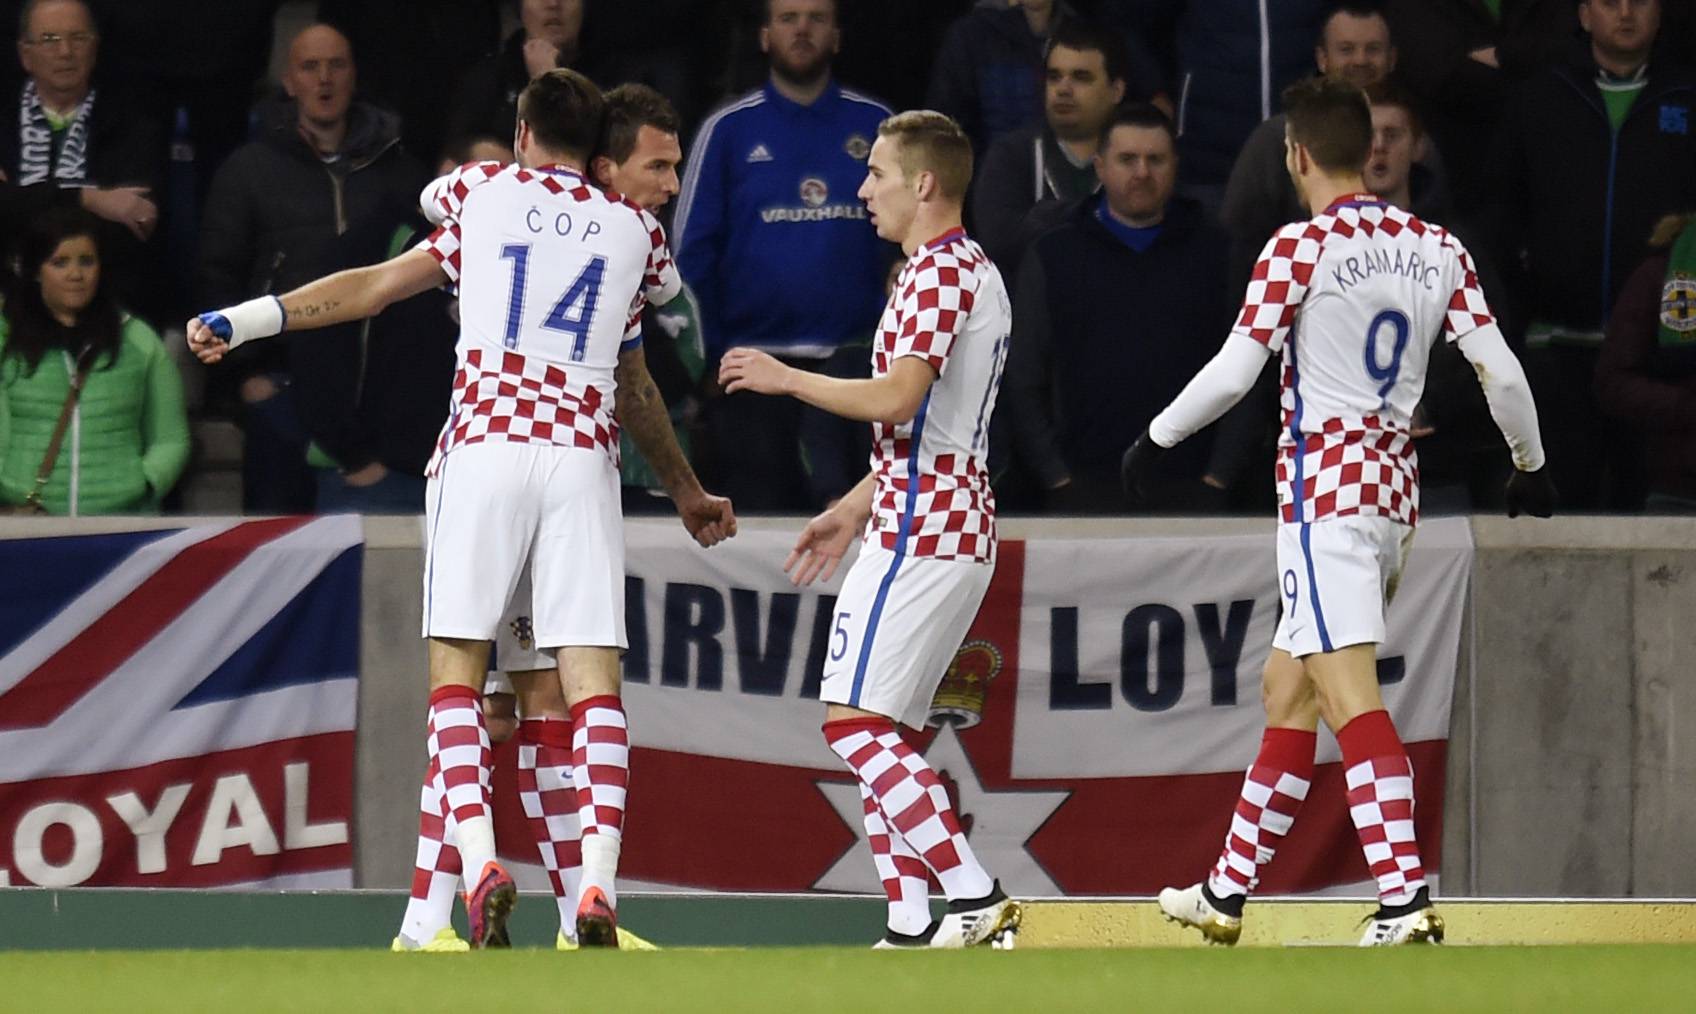 Croatia's Mario Mandzukic celebrates scoring their first goal with Duje Cop and teammates